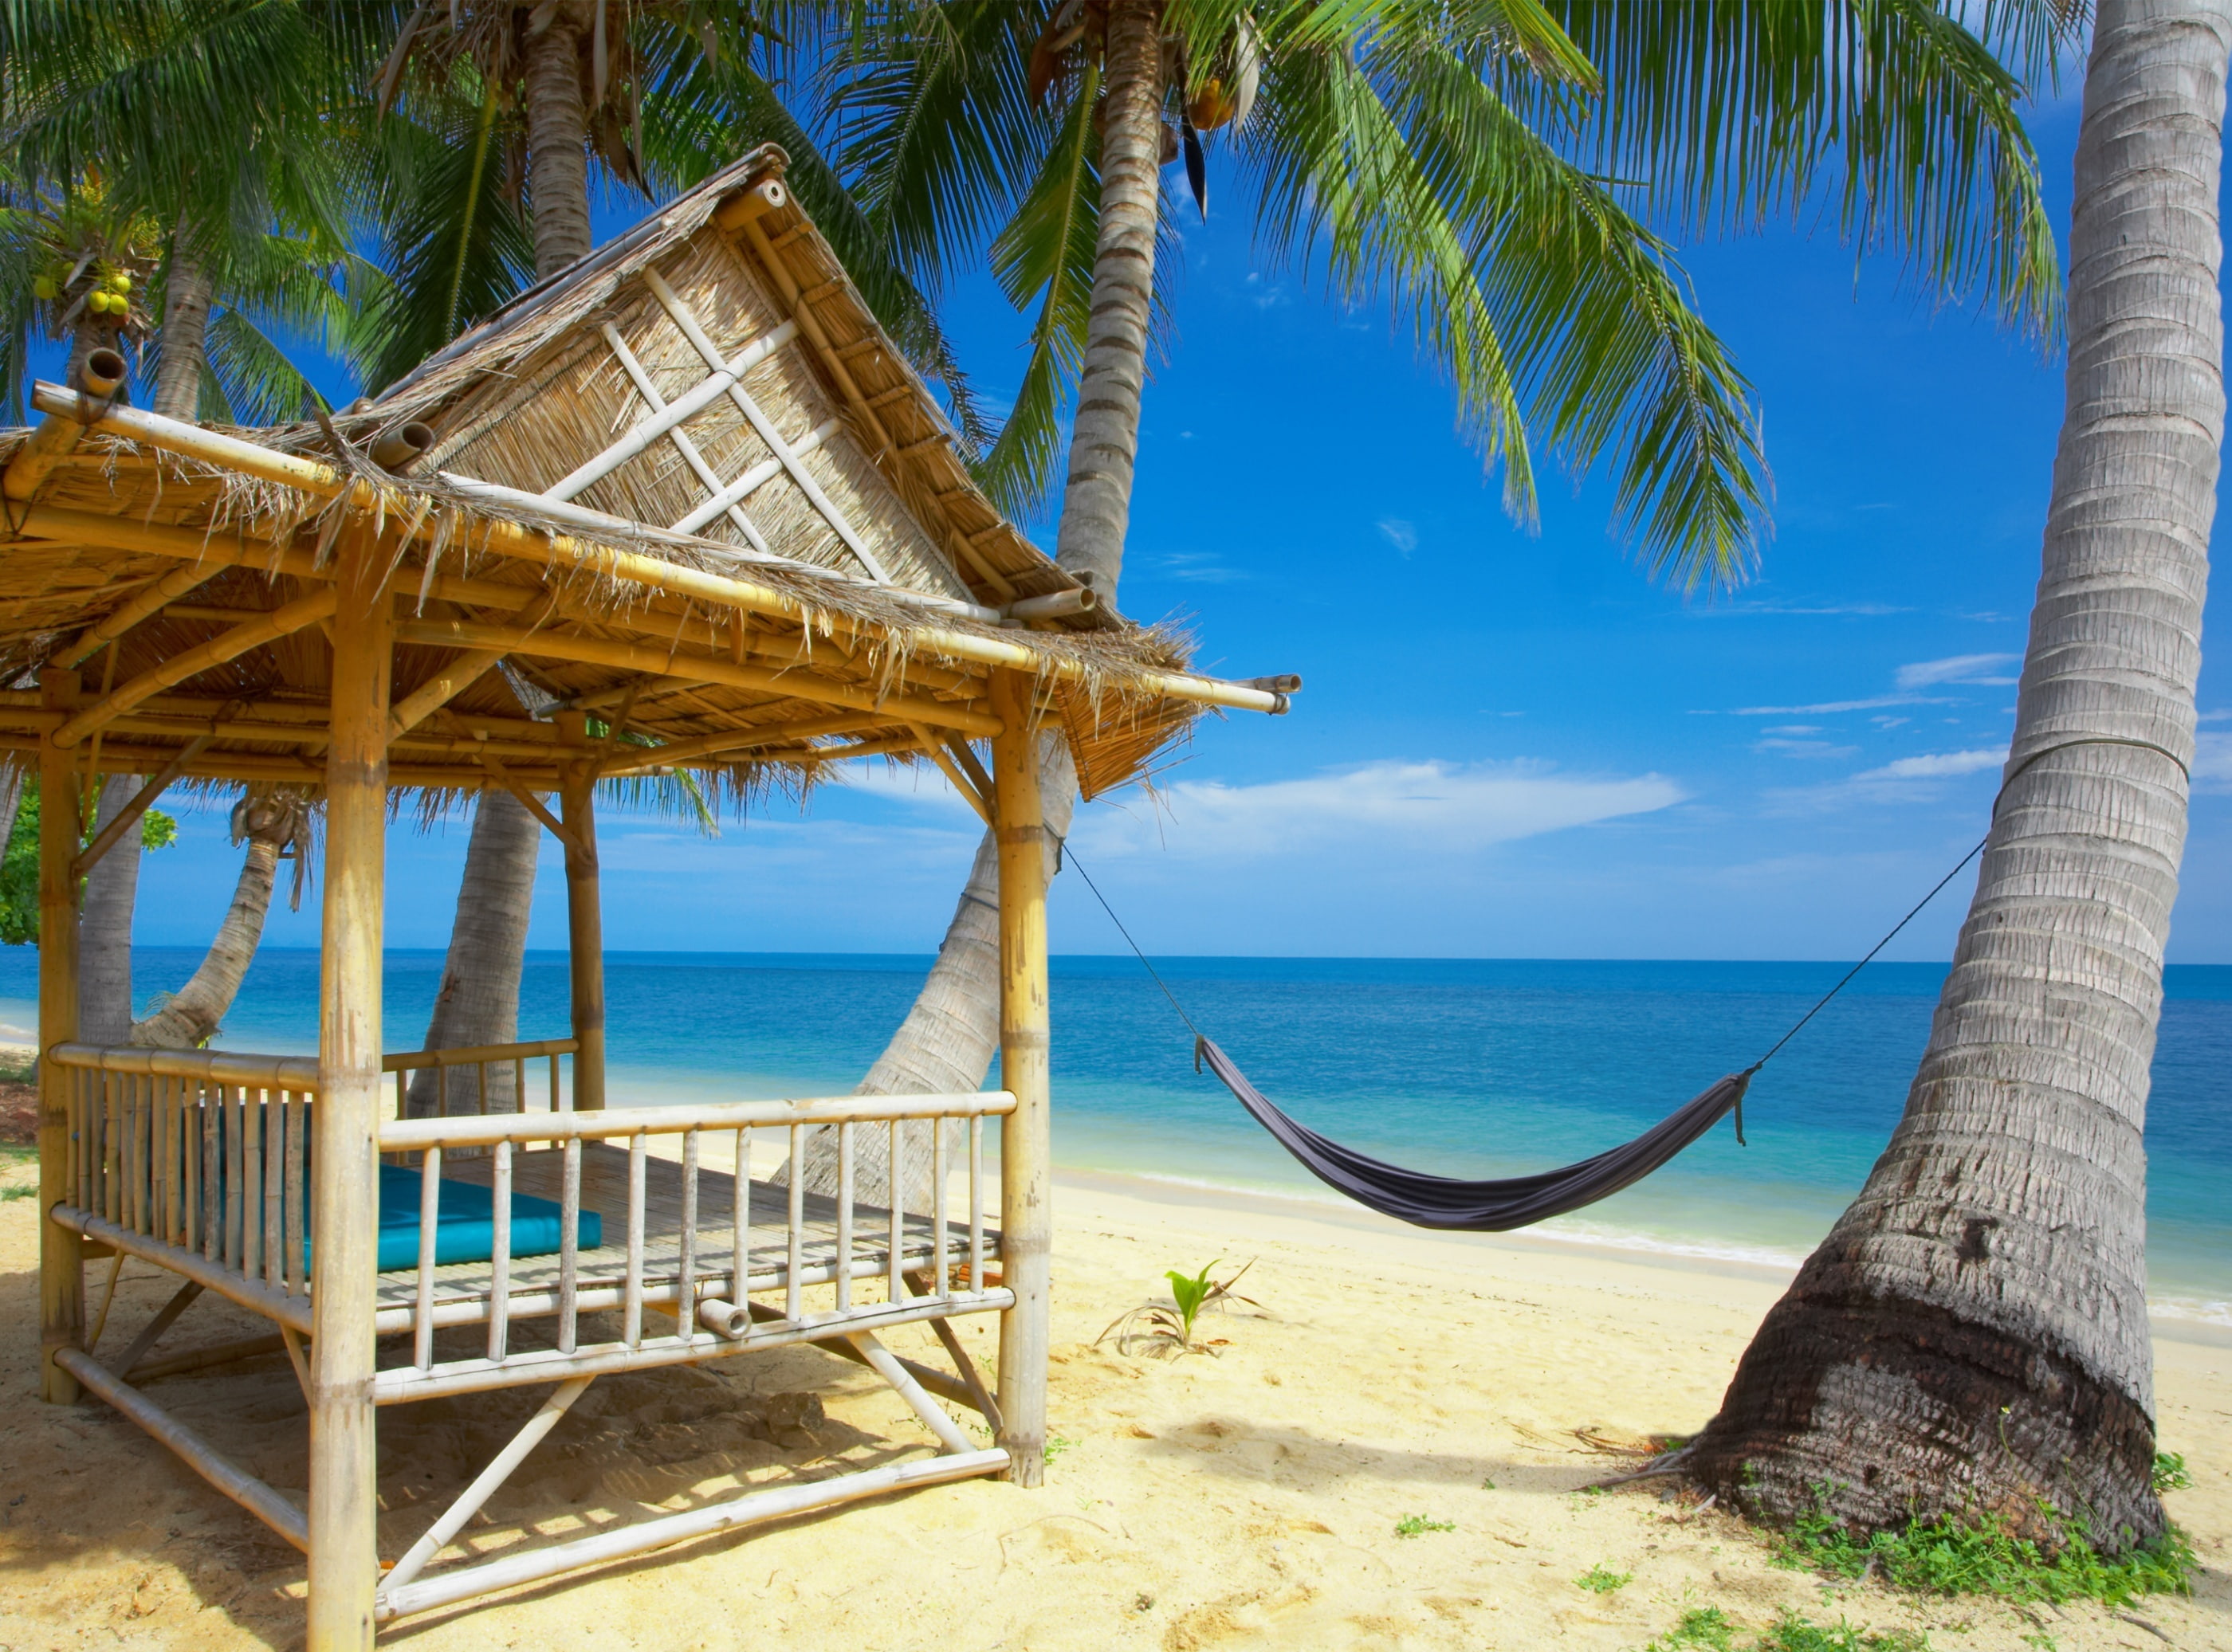 Hammock On The Beach, black hammock, Travel, Islands, sea, palm tree